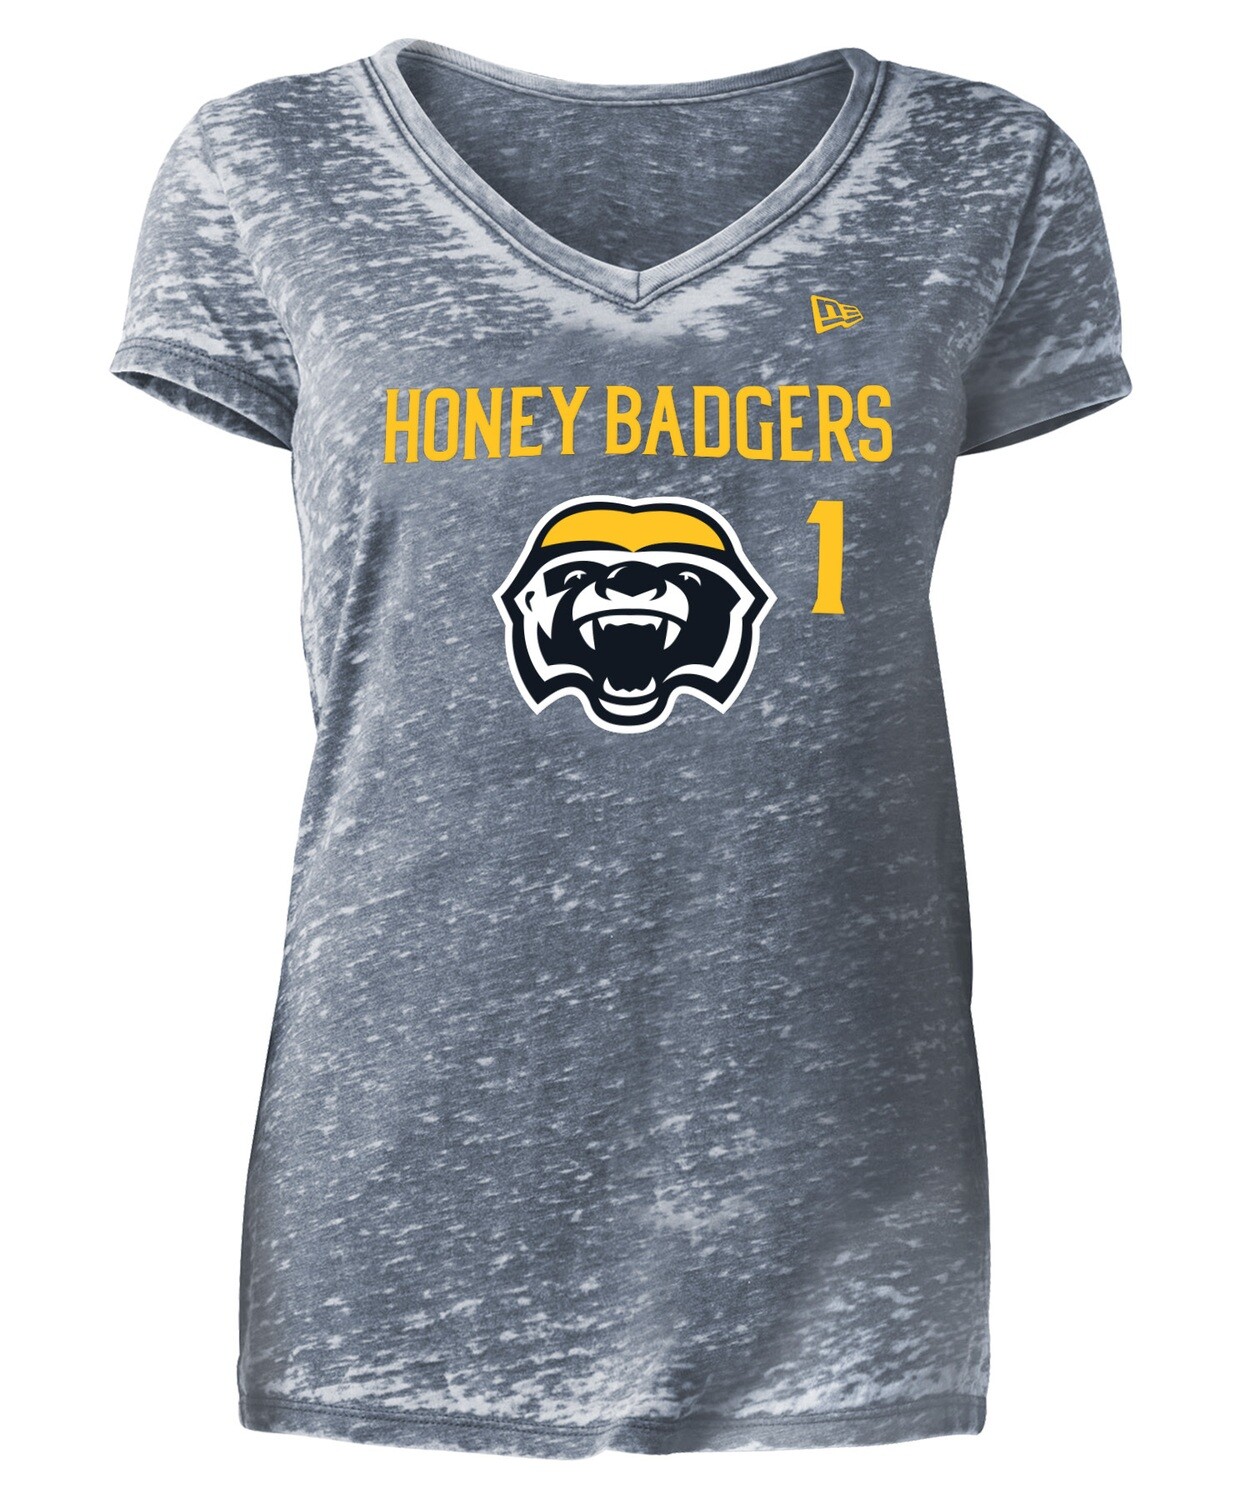 Womens Honey Badgers Jersey Tee - Honey Badgers Shop